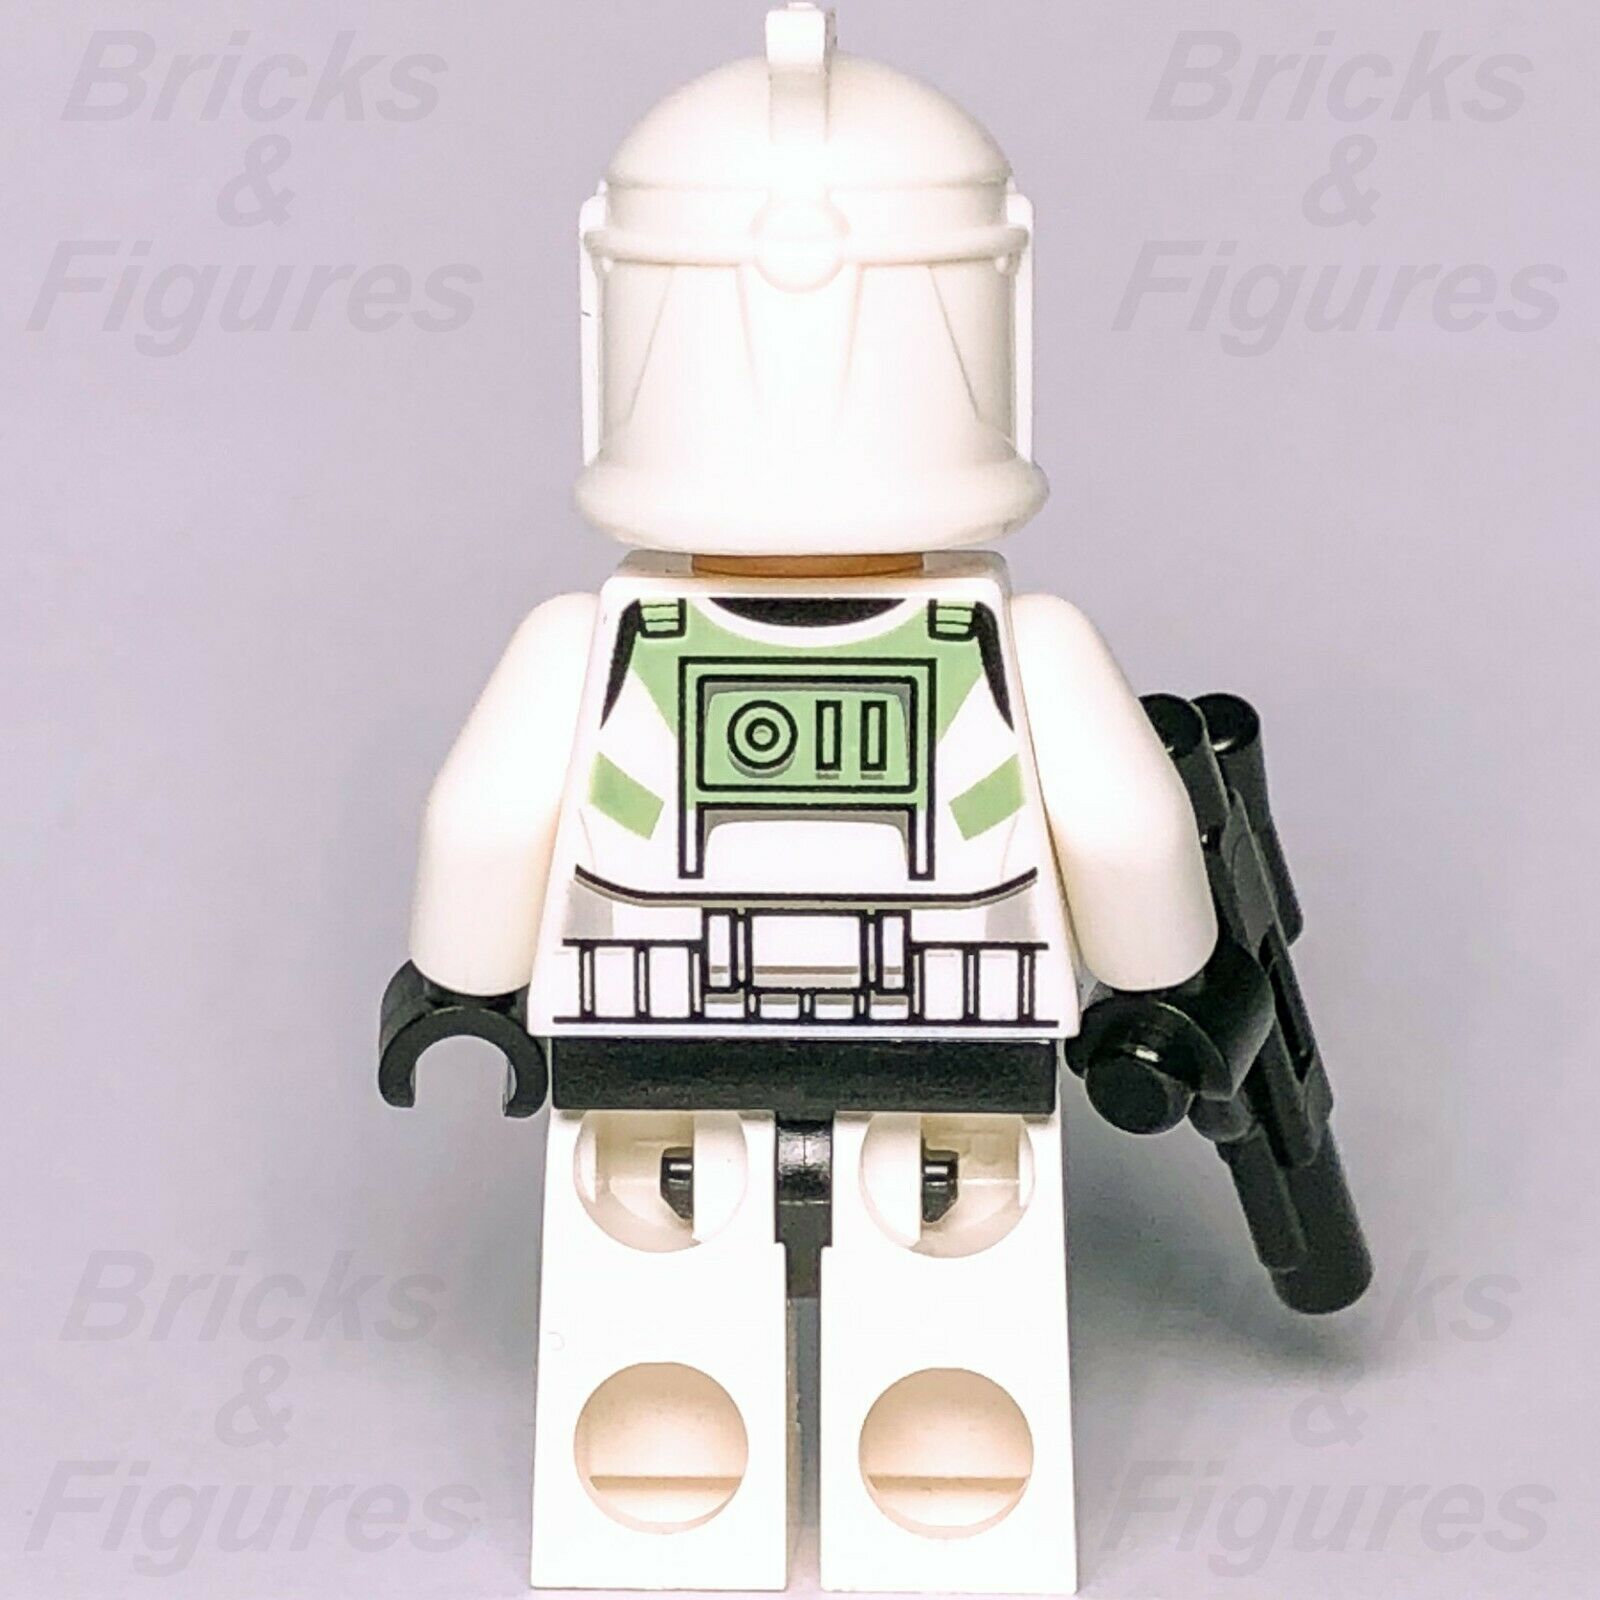 New Star Wars LEGO Clone Trooper with Sand Green Markings Minifigure 7913 - Bricks & Figures